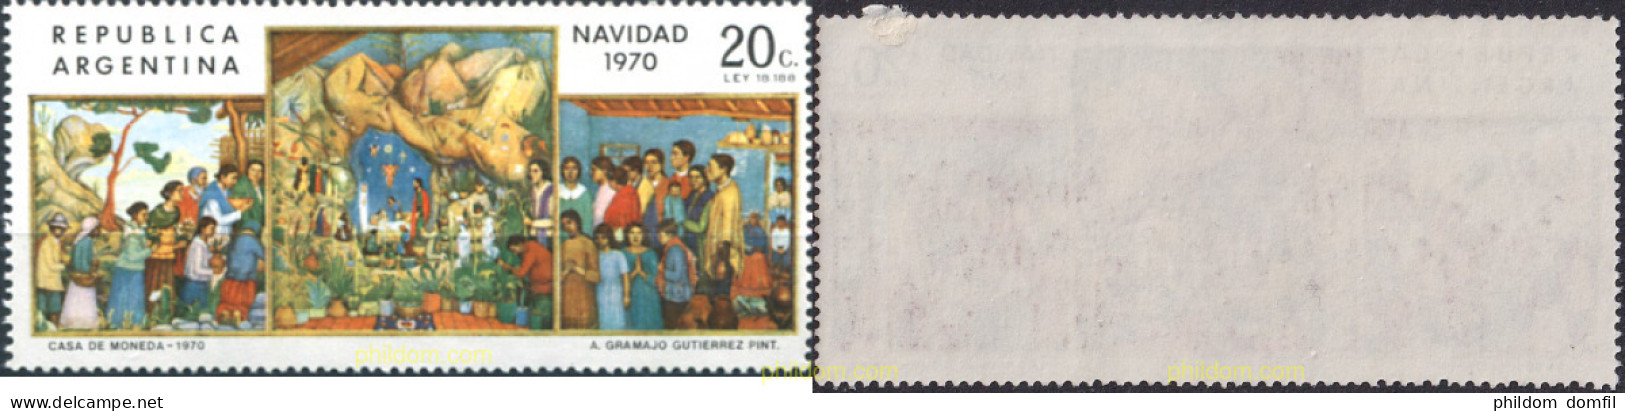 727270 MNH ARGENTINA 1970 NAVIDAD - Ungebraucht